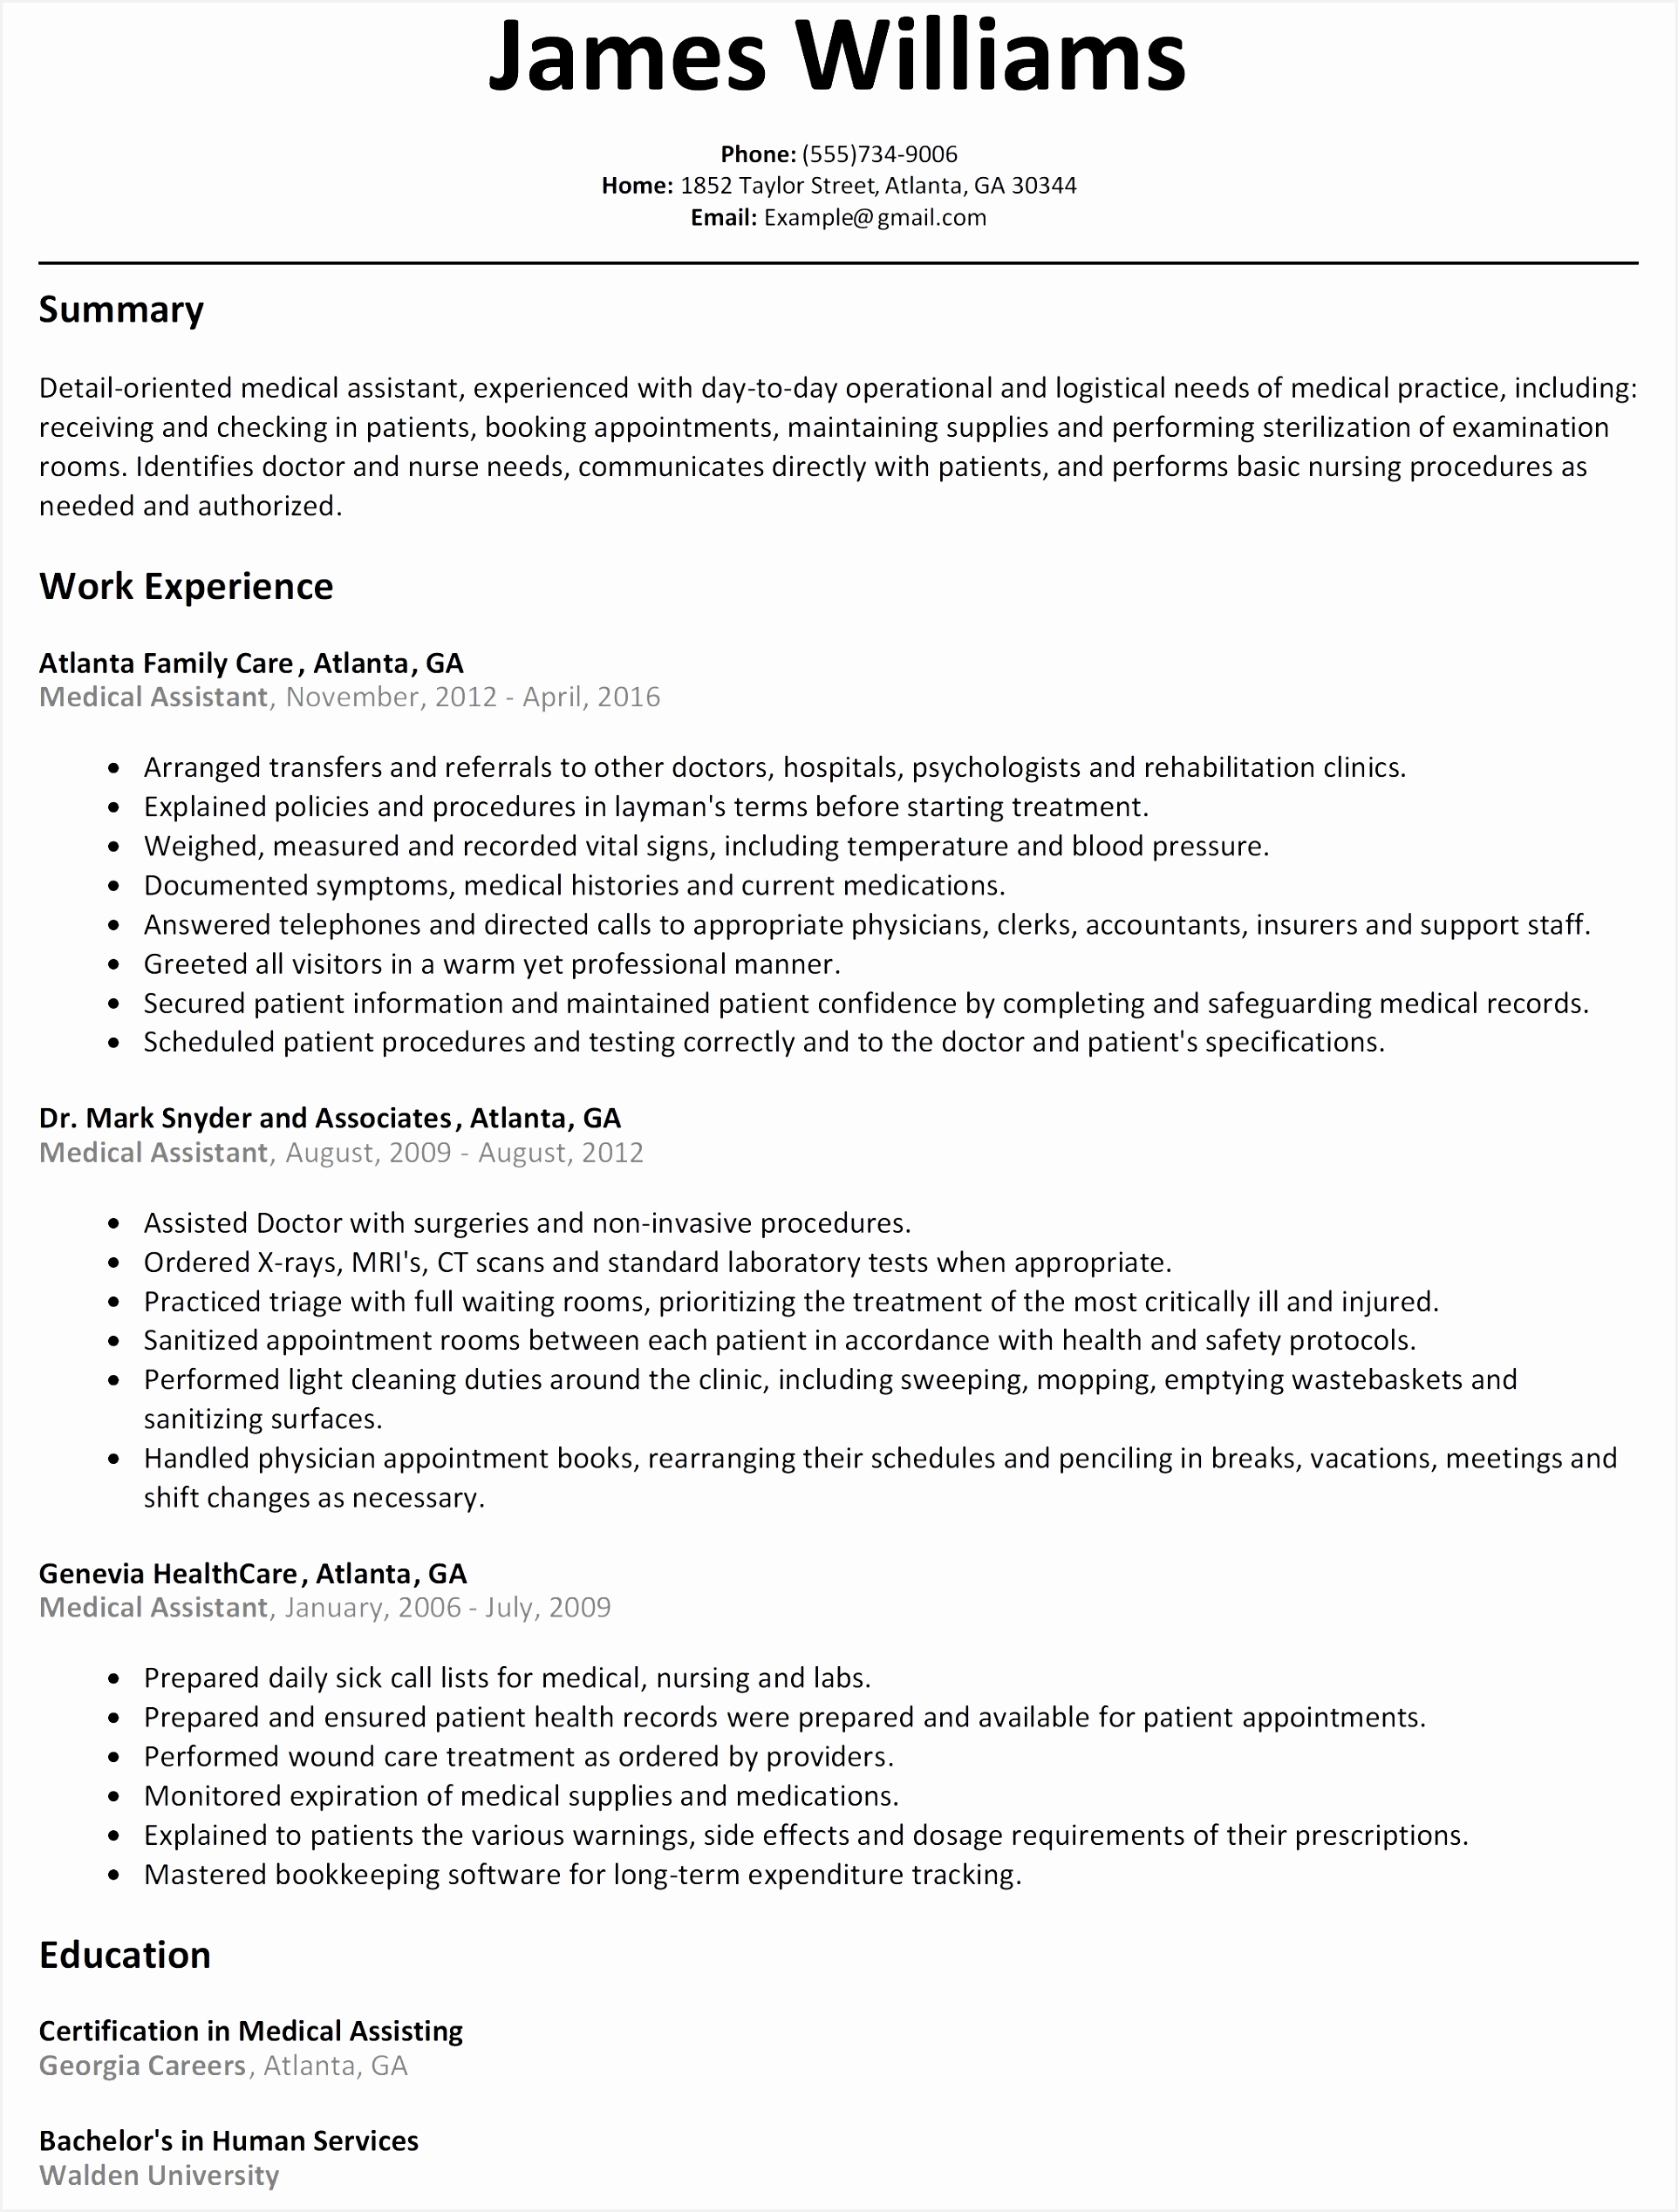 cascade resume template fresh resume templates word free new resume template free word new od of 253719242hrkw